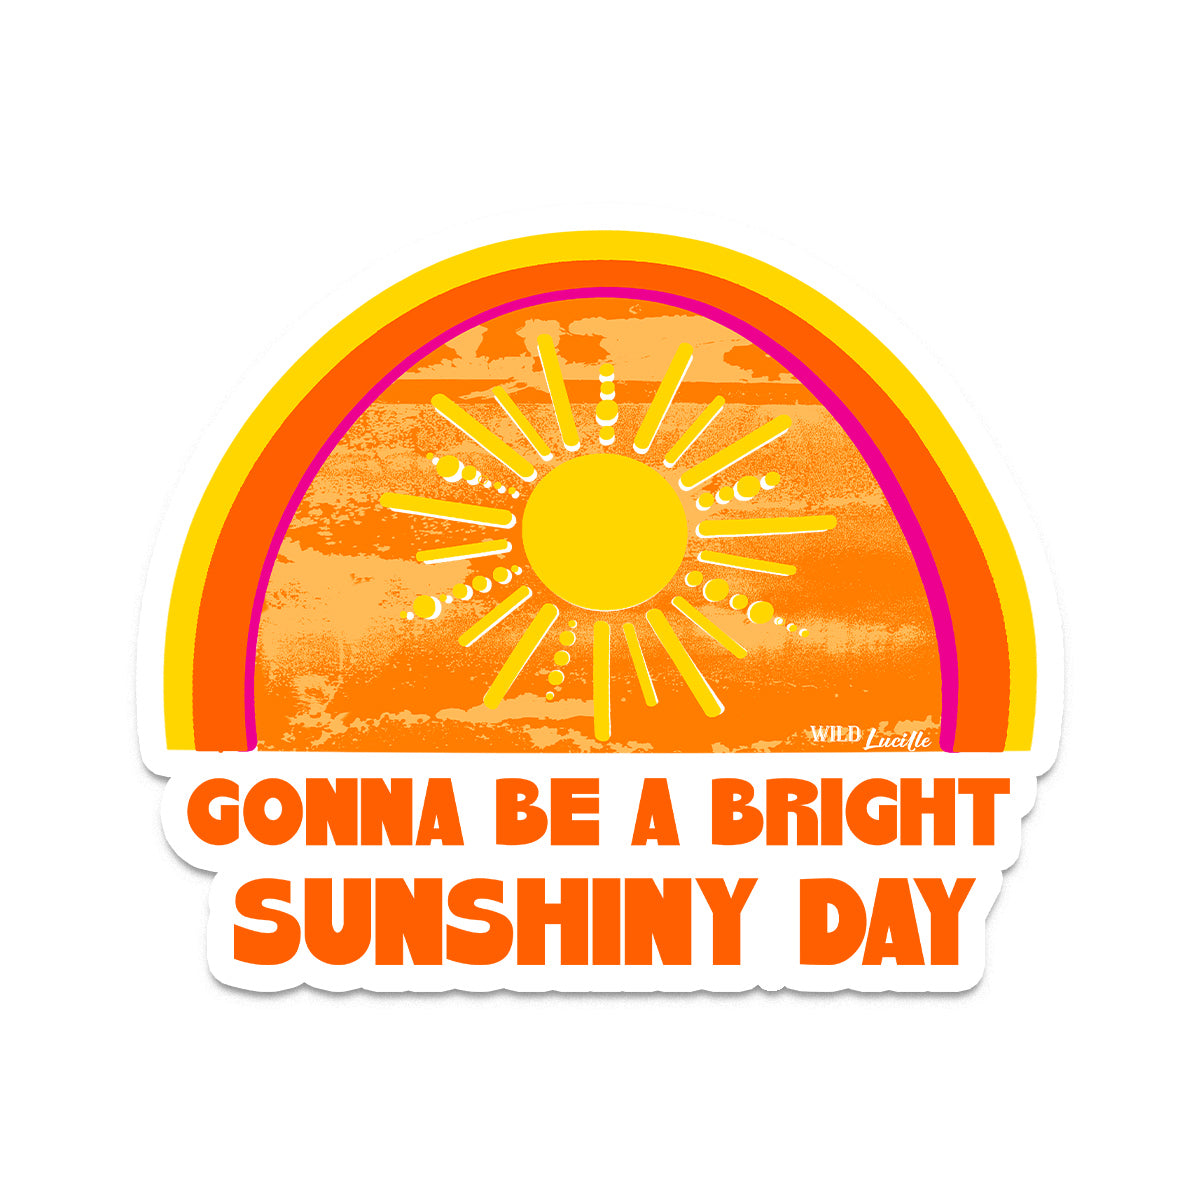 Bright Sunshiny Day - Jumbo Inspirational Vinyl Decal